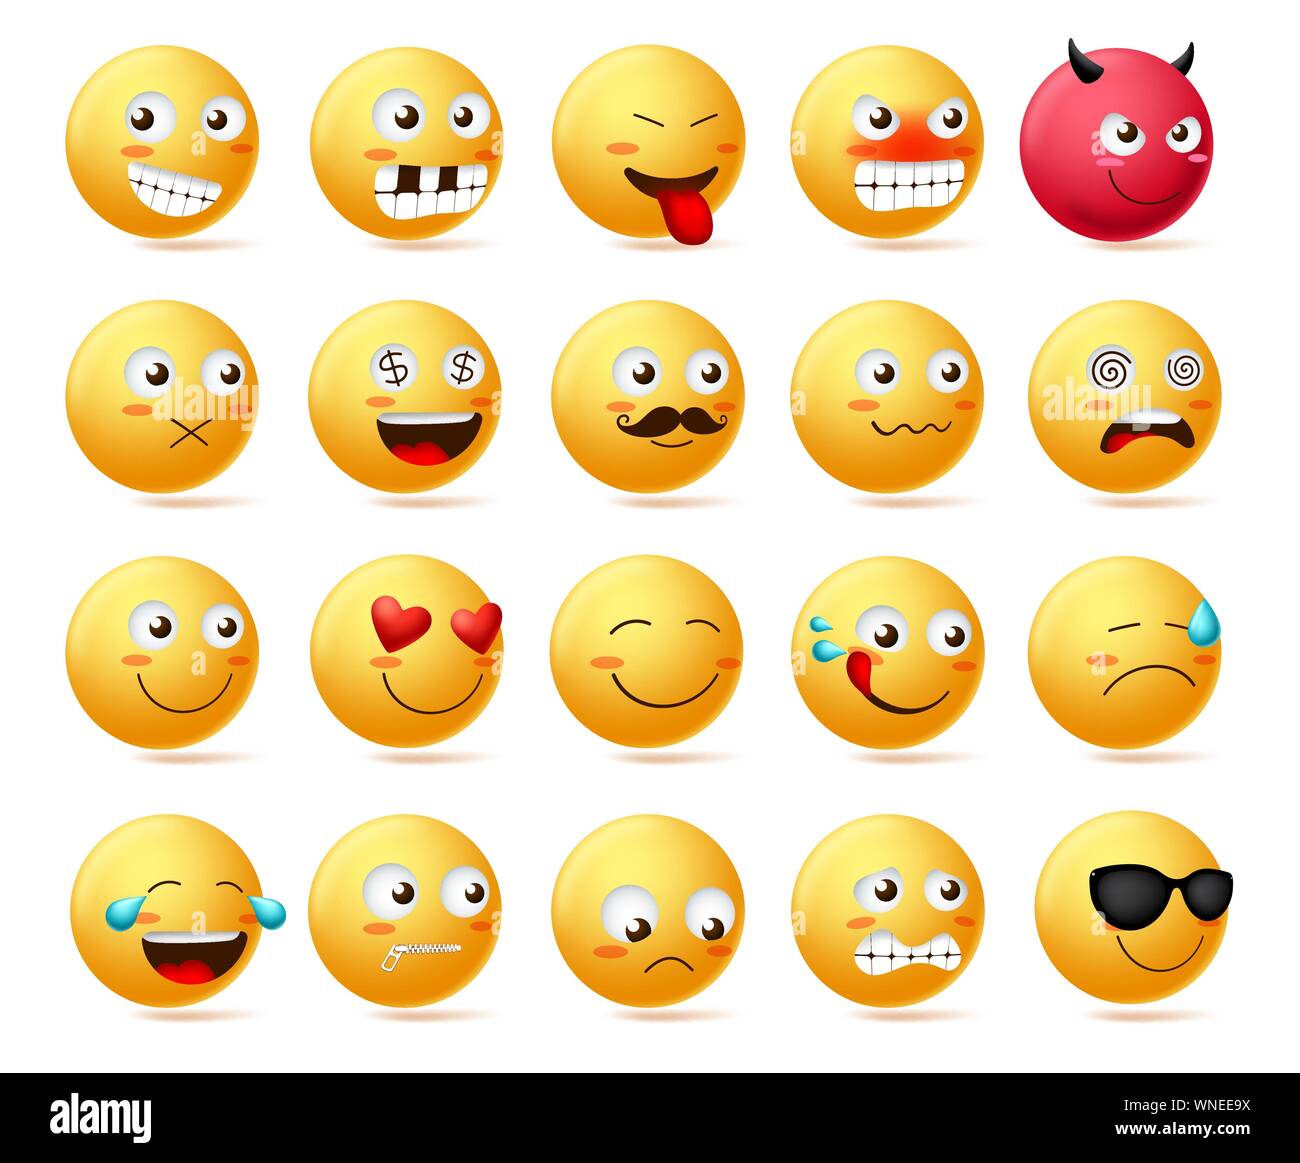 Smiley emoticon vector character face set. Smileys cute faces